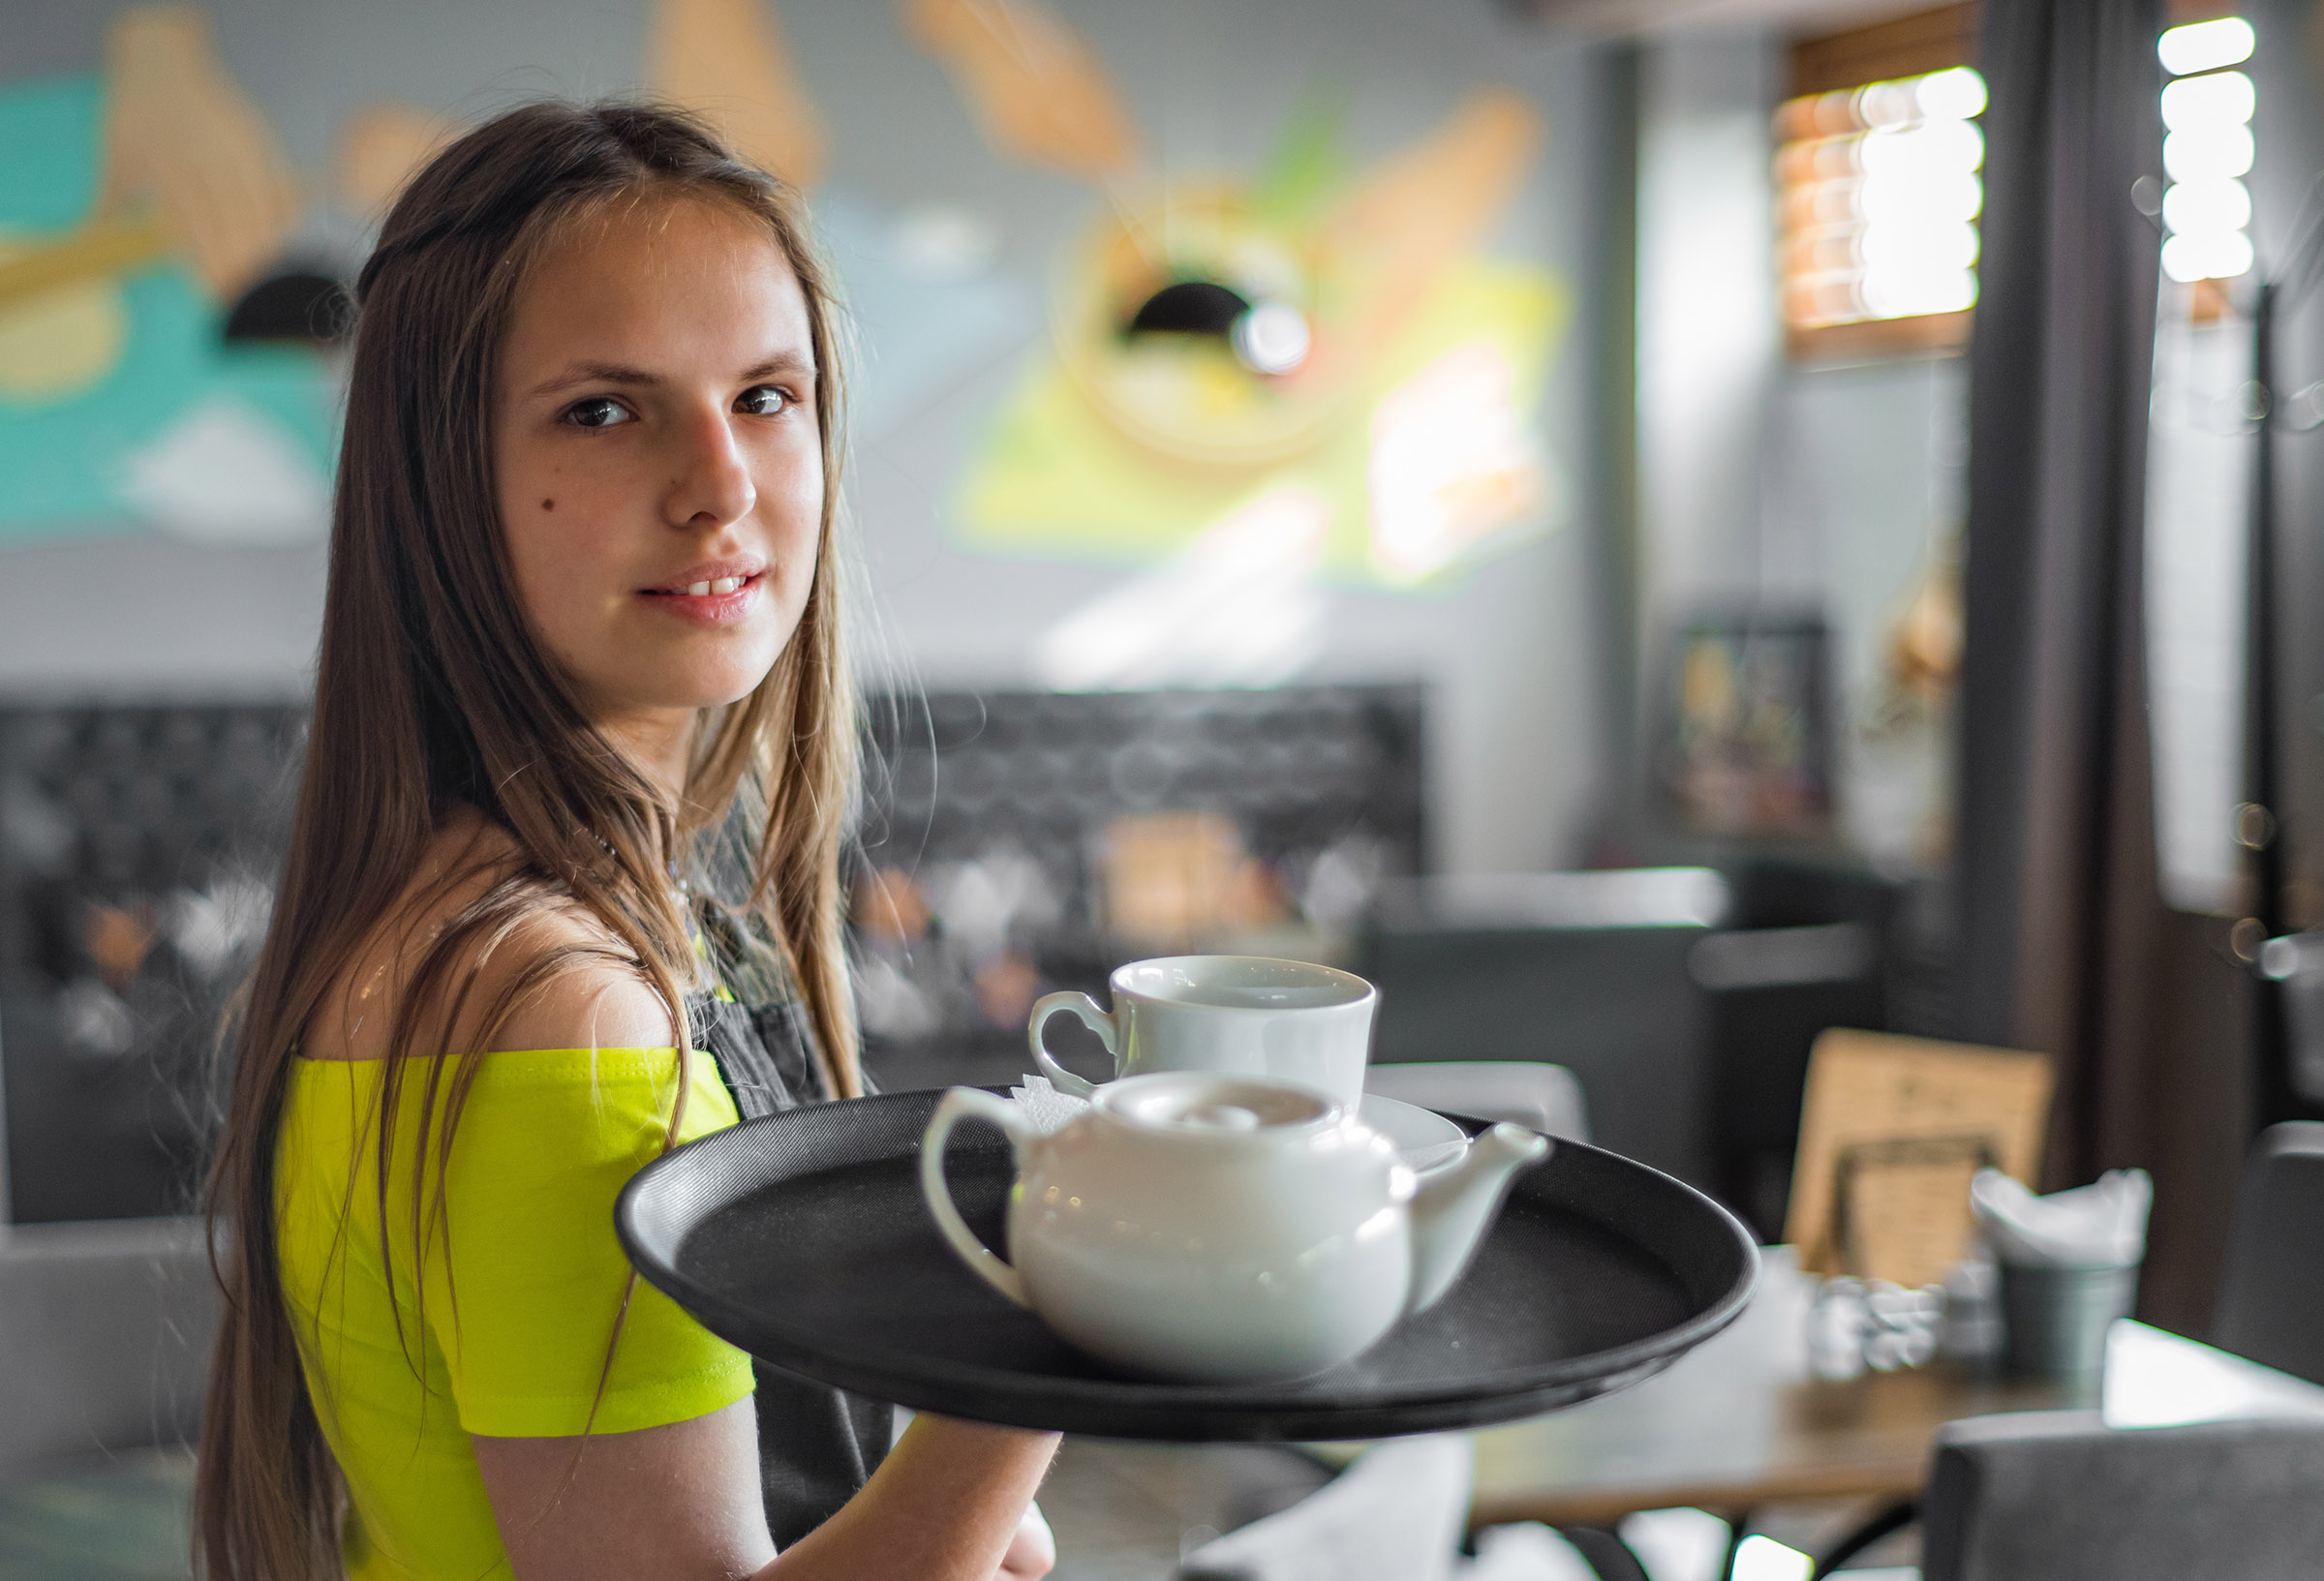 A teen girl serves coffee at a restaurant.